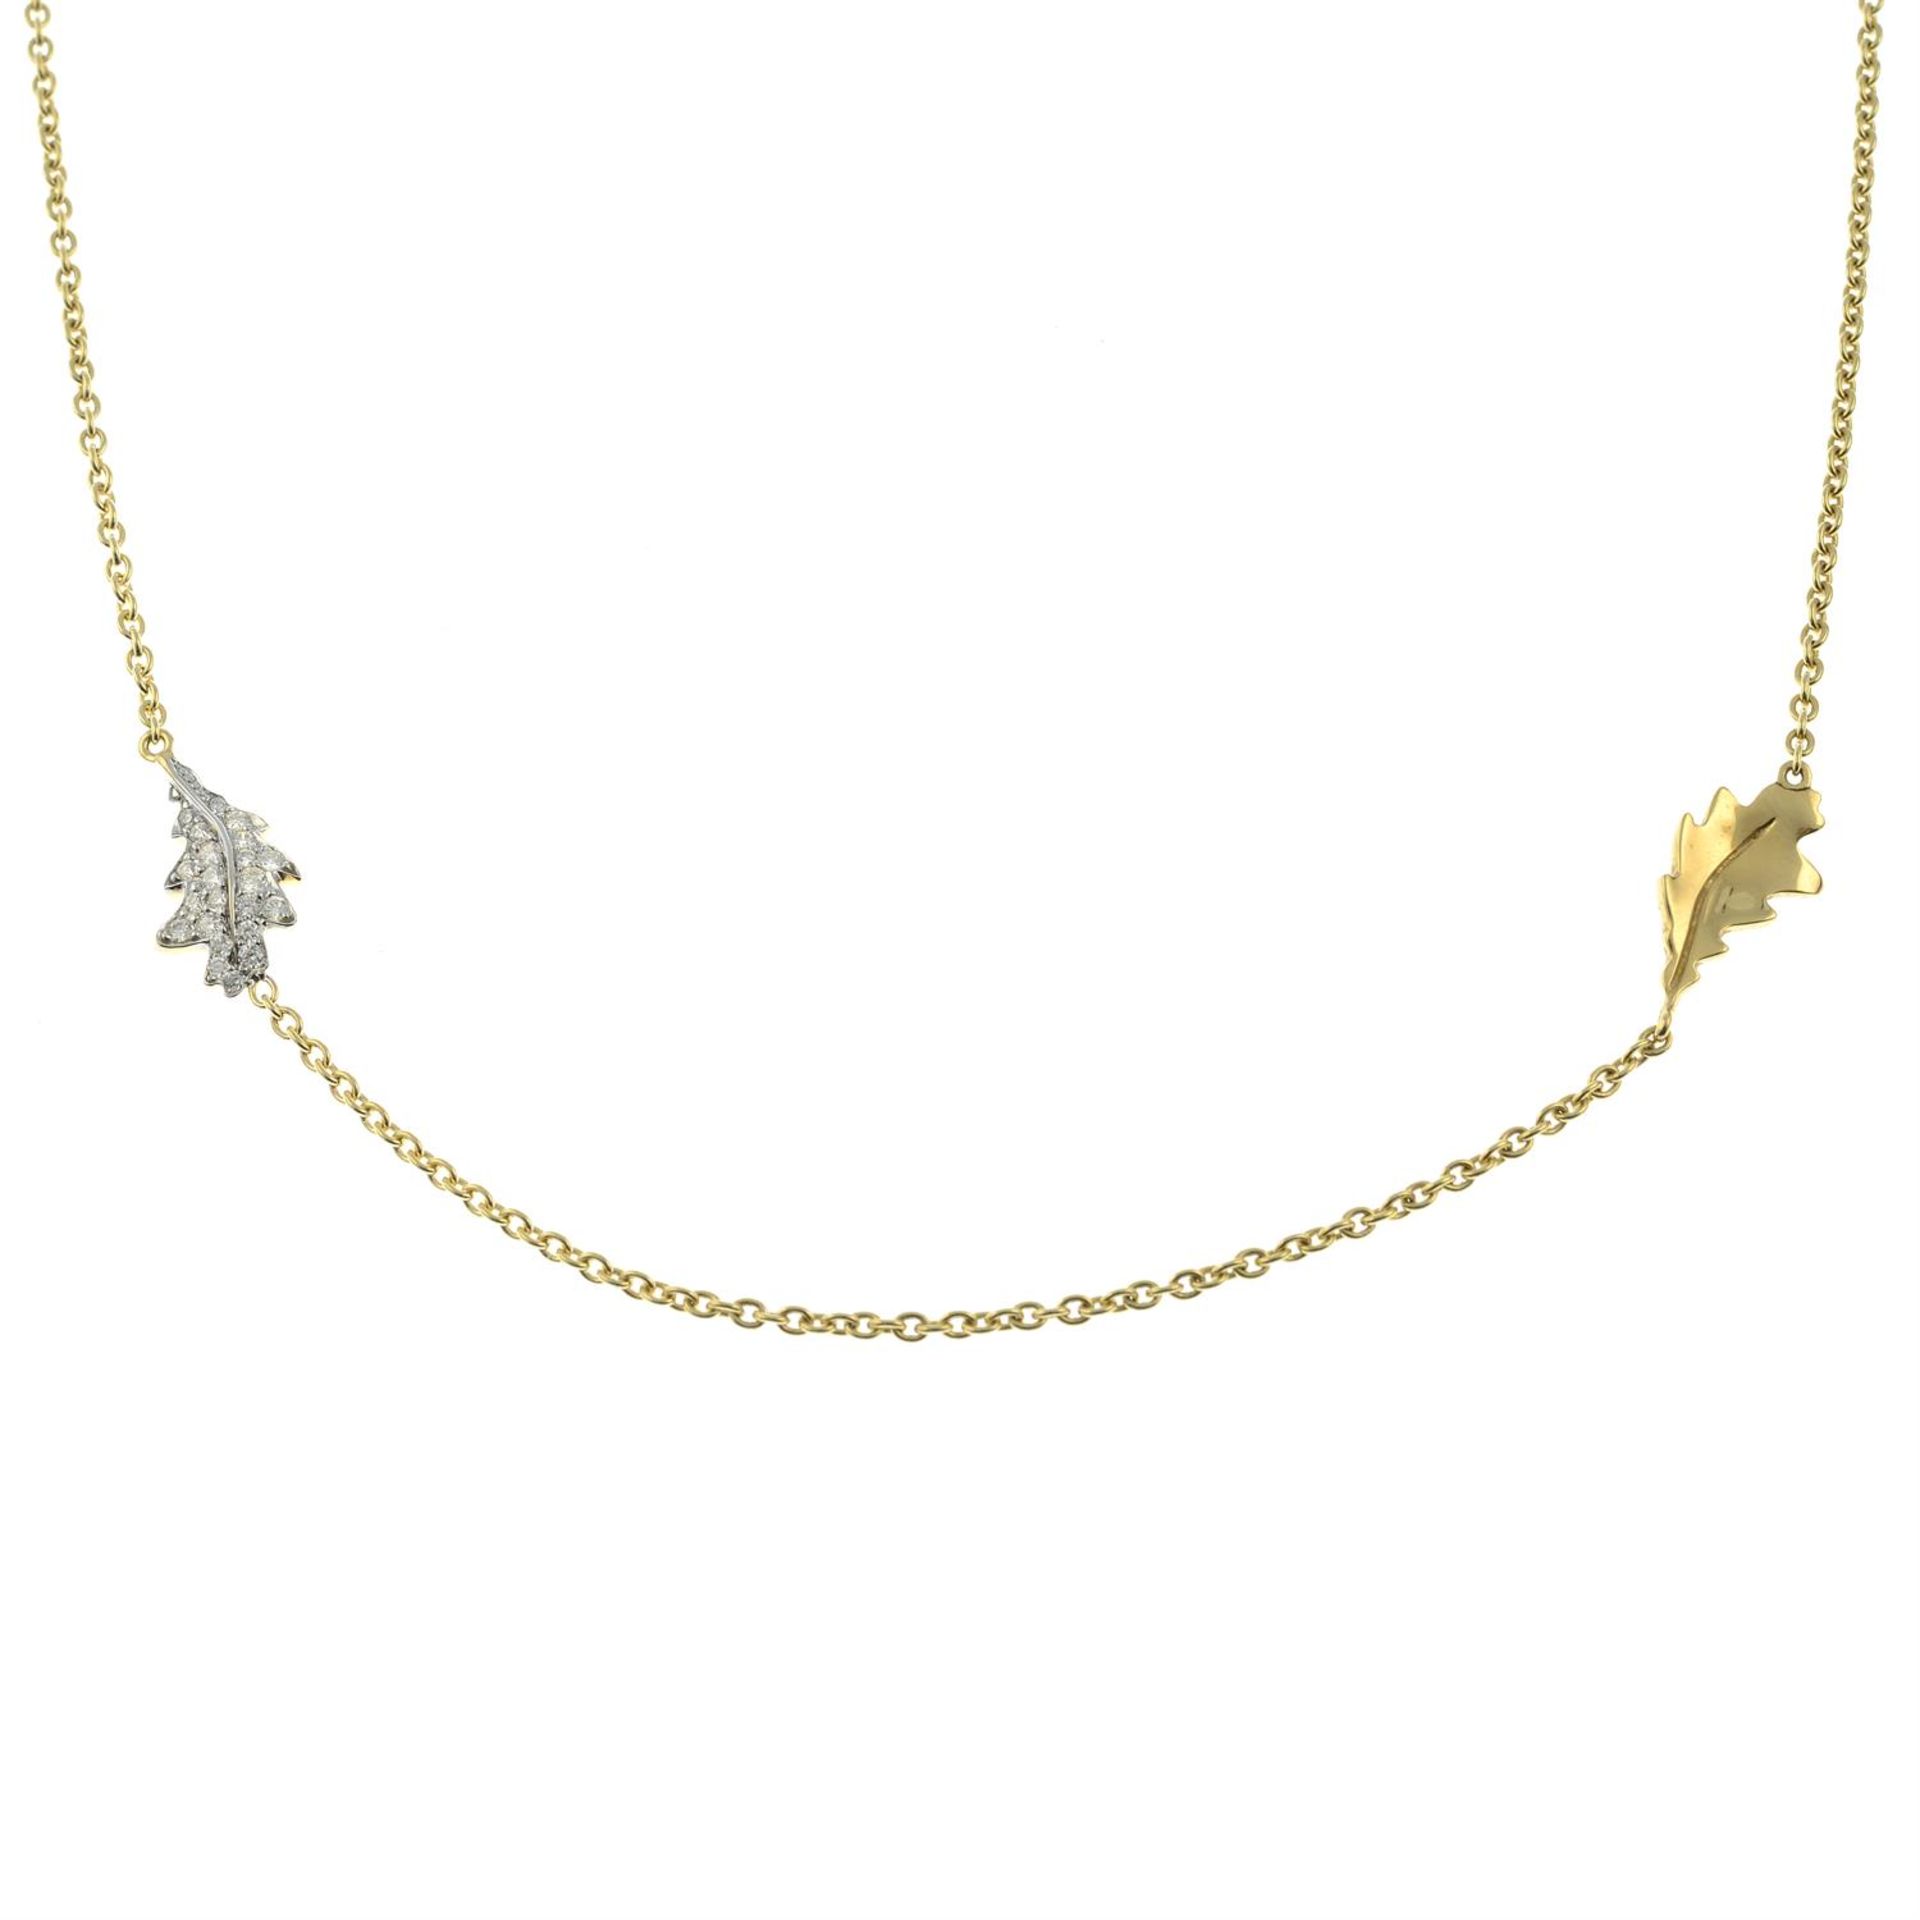 A tri-colour 18ct gold foliate motif necklace, with pavé-set diamond highlight, by Asprey. - Image 2 of 4